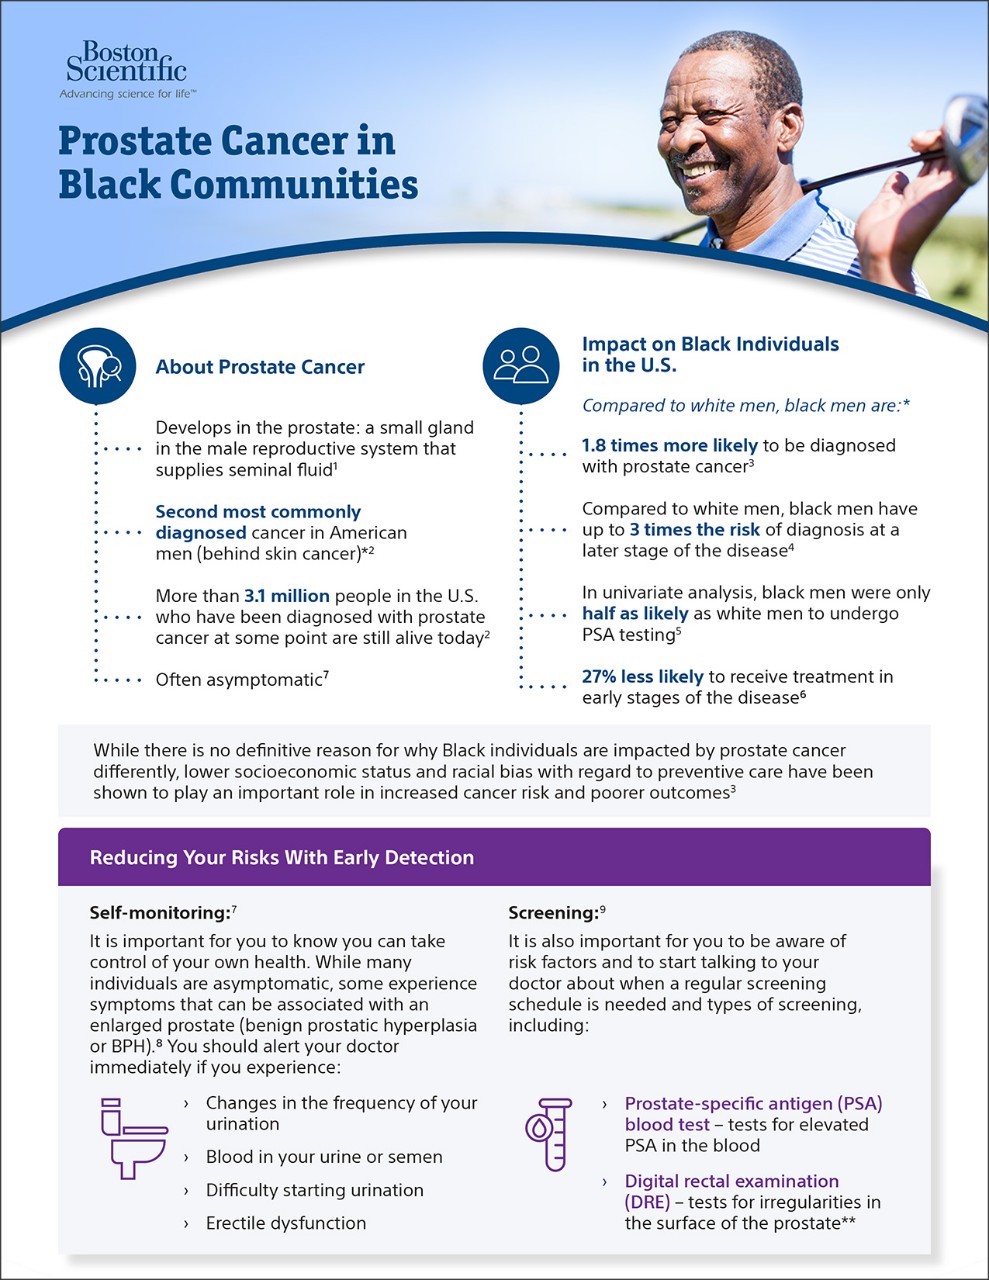 Close the Gap Fact Sheet in Black Communities thumbnail.